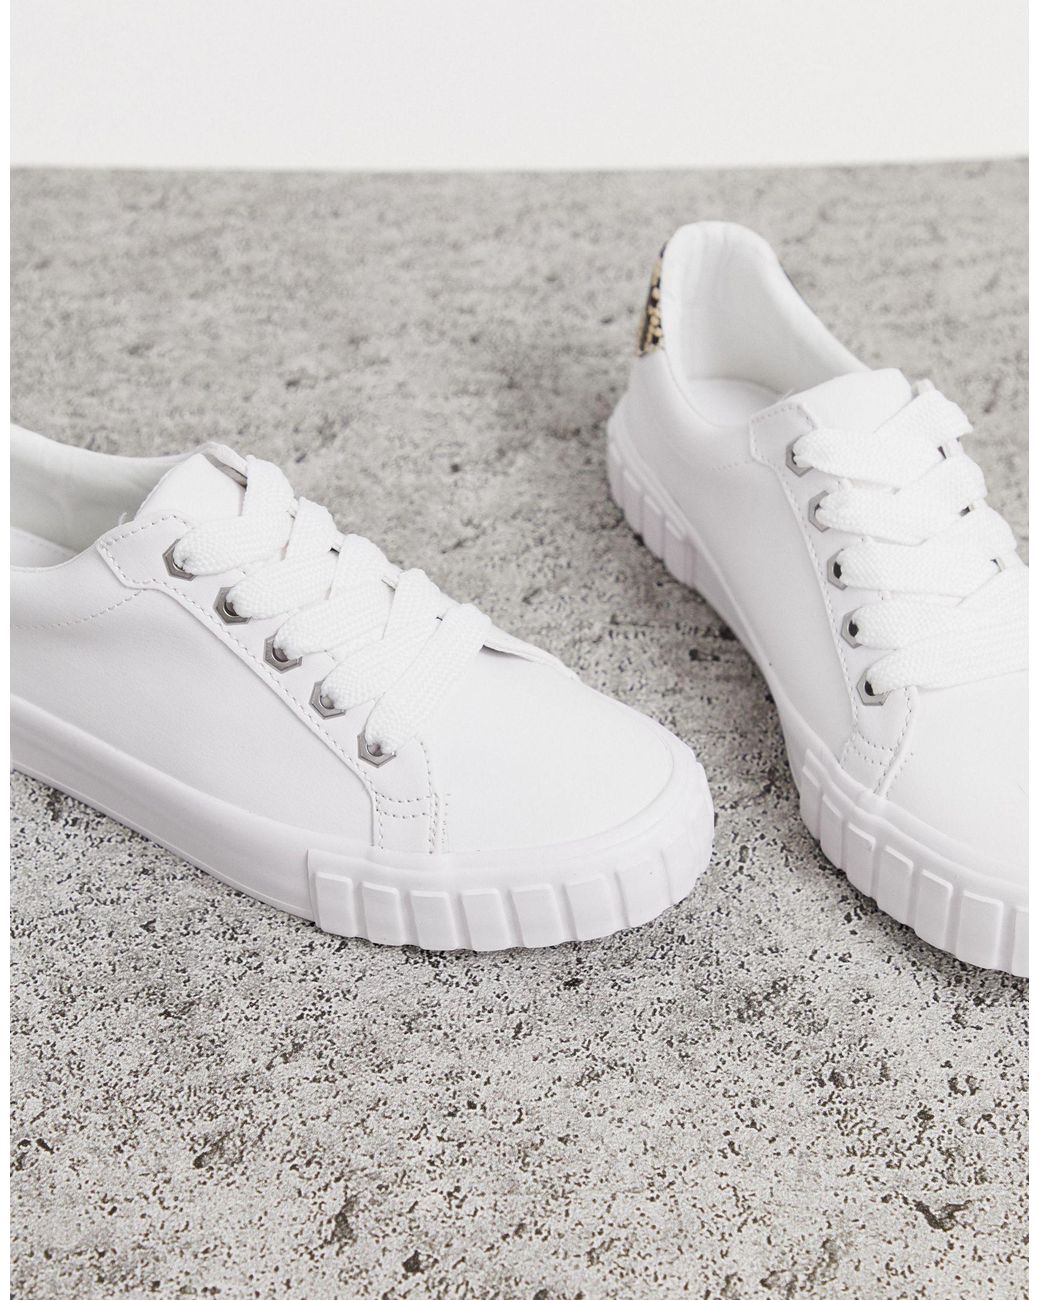 Bershka Single Sole Lace Up Sneakers in White - Lyst